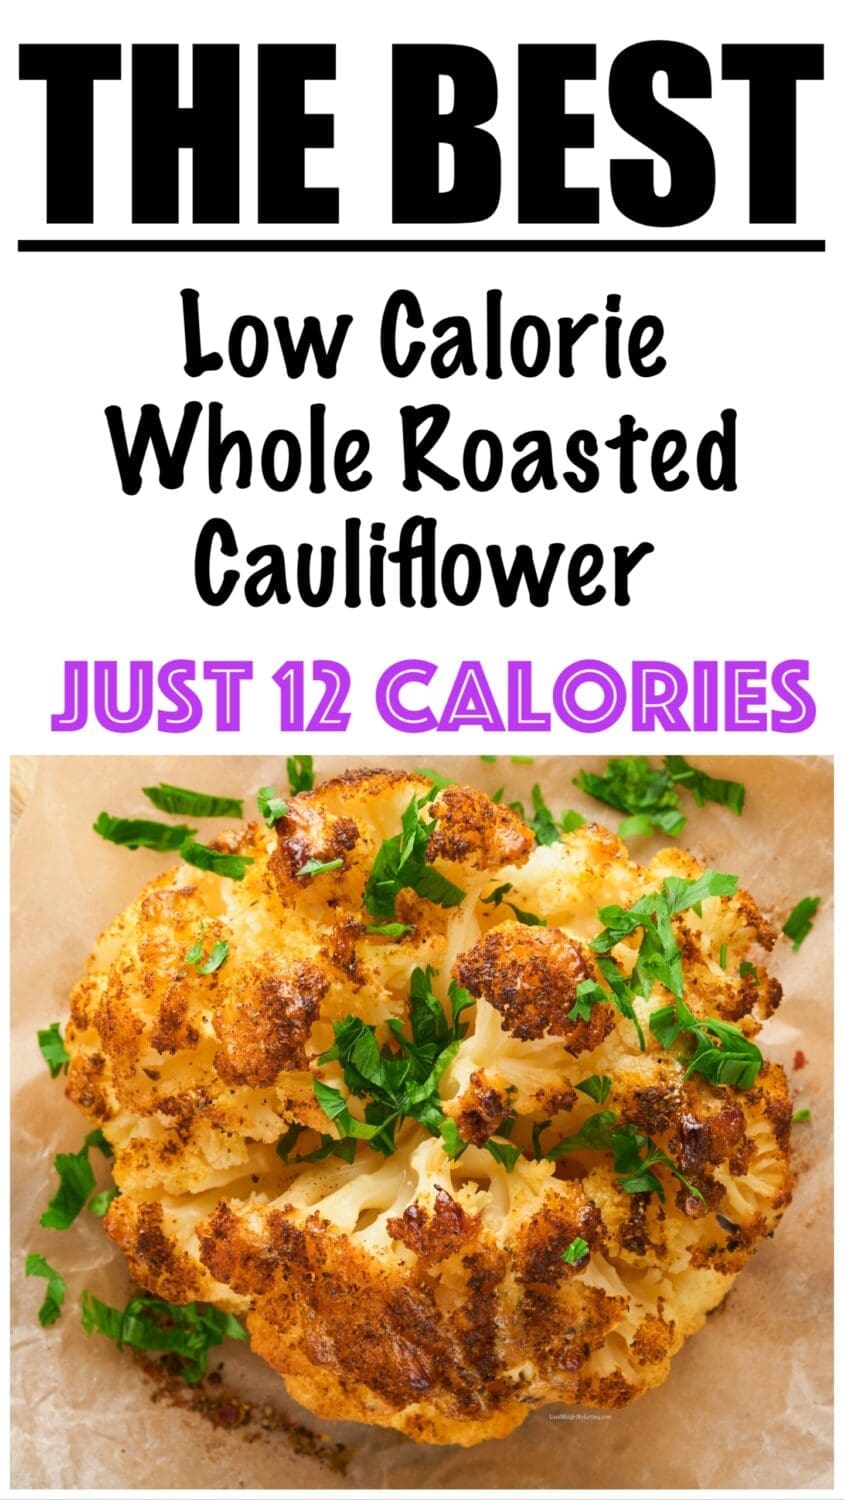 Healthy Whole Roasted Cauliflower